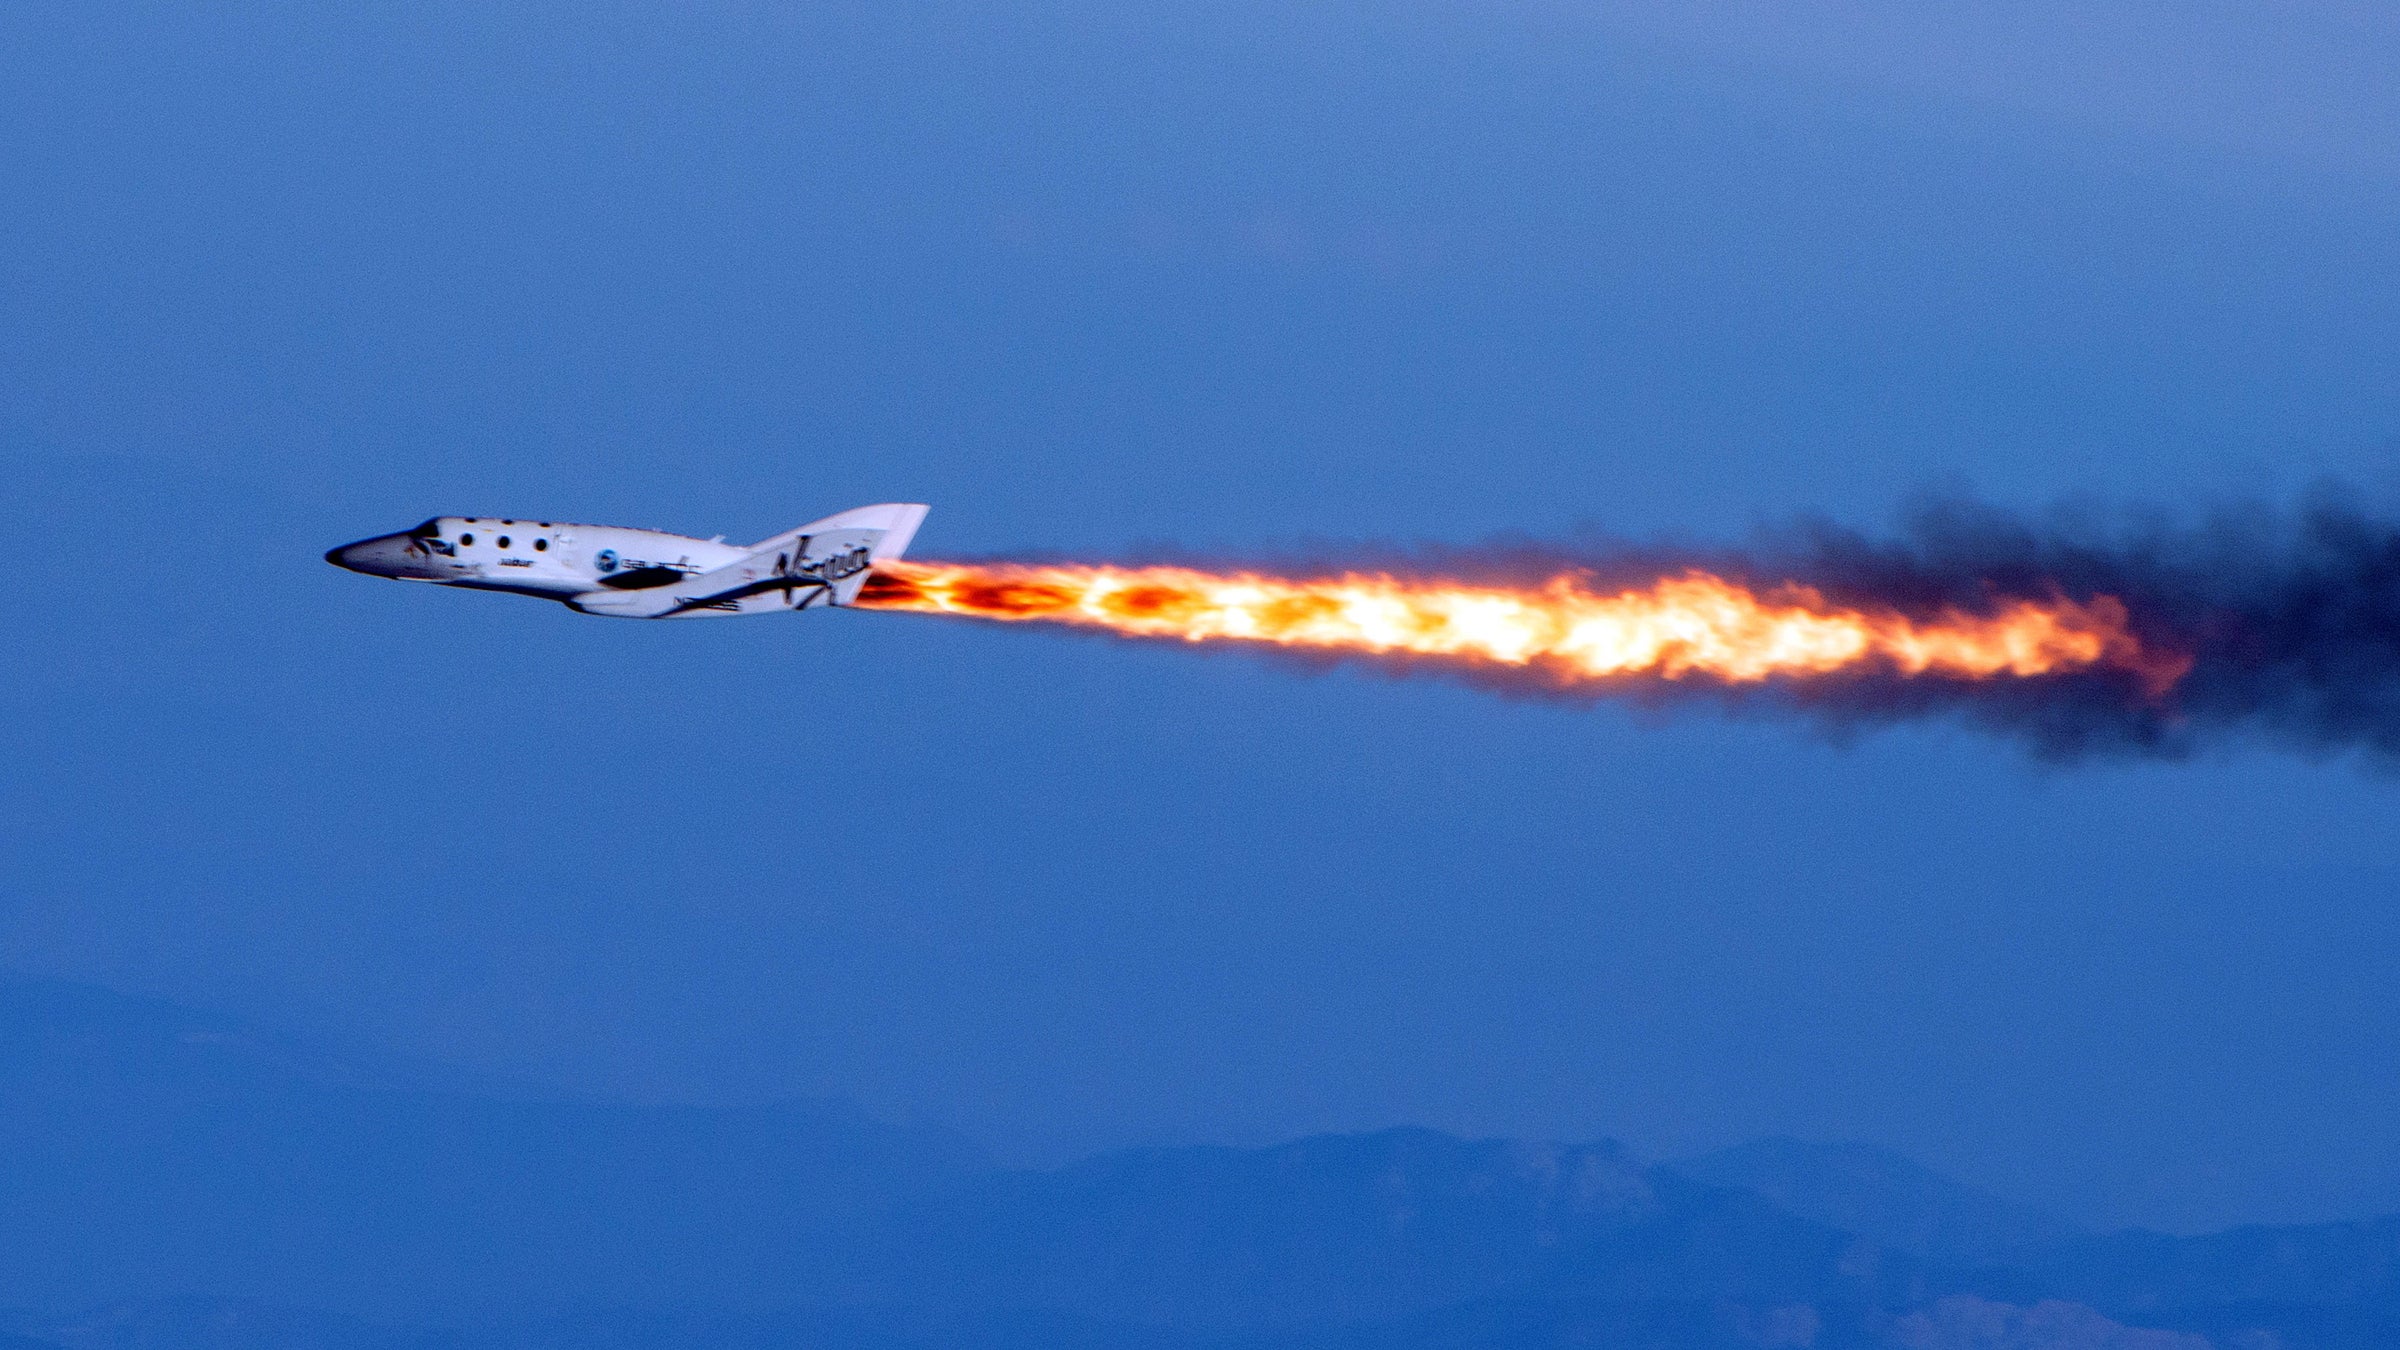  Virgin Galactic's SpaceShipTwo space tourism rocket. (Mark Greenberg/Virgin Galactic file photo via AP) 